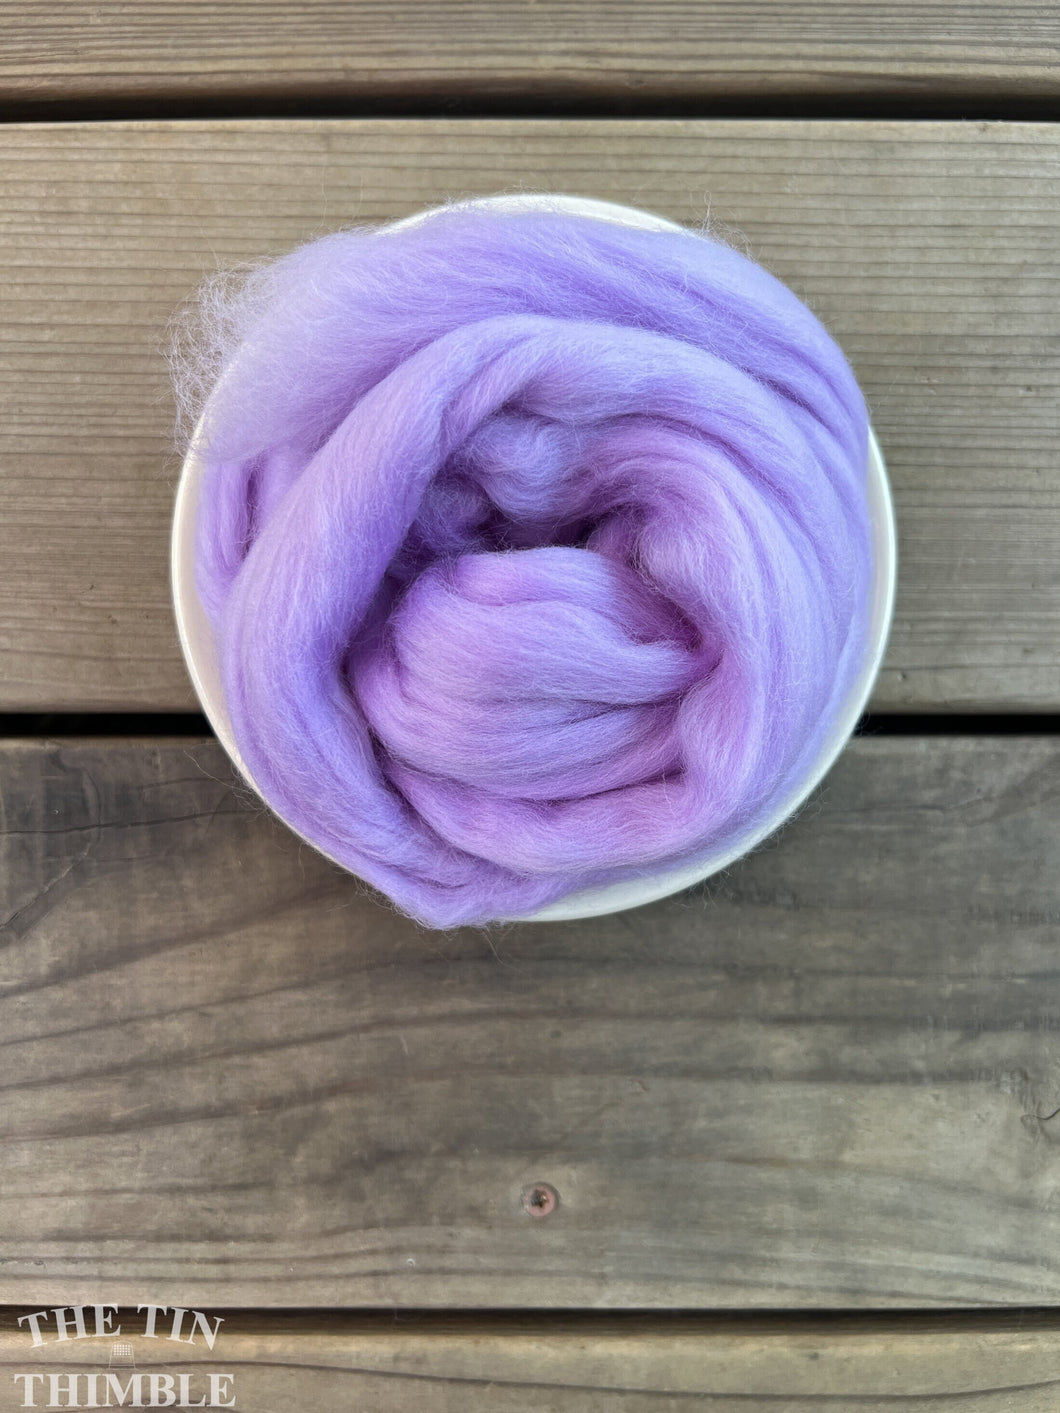 Lavender Purple Superfine Merino Wool Roving - 1 oz - Superfine Roving for Felting, Weaving, Spinning and More